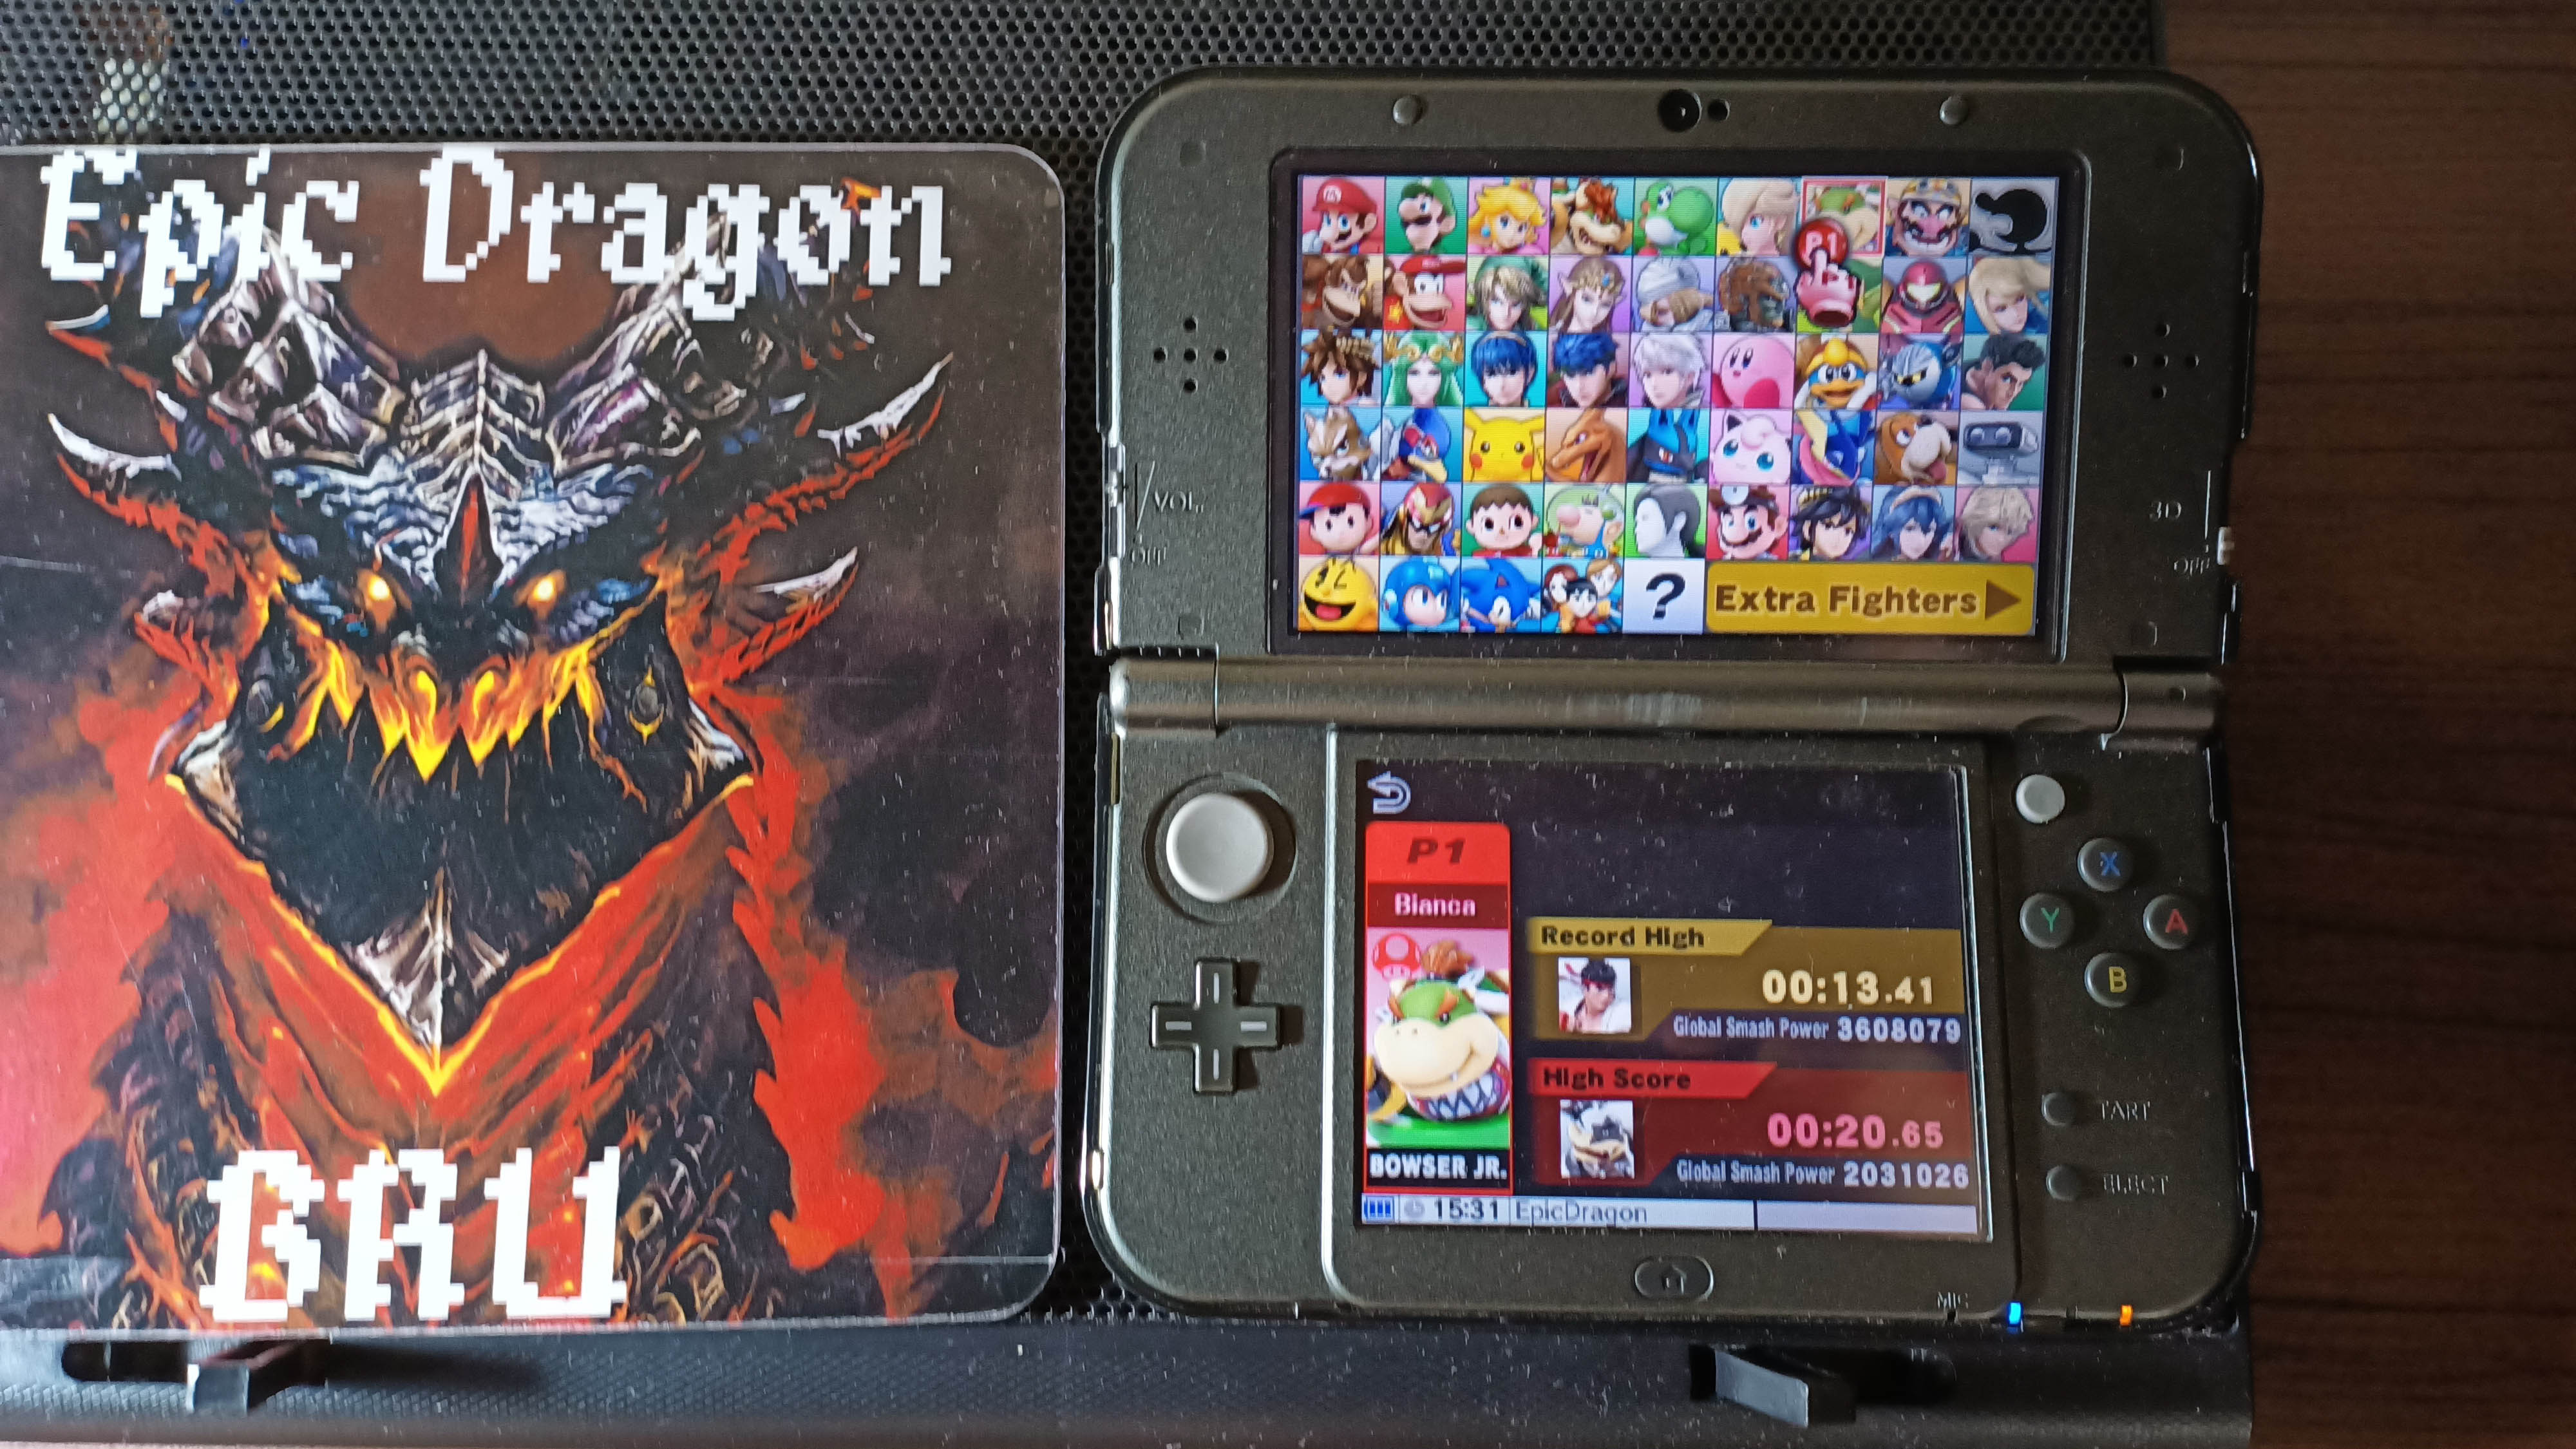 EpicDragon: Super Smash Bros. for Nintendo 3DS: 10-Man Smash: Bowser Jr. (Nintendo 3DS) 0:00:20.65 points on 2022-08-30 13:56:39